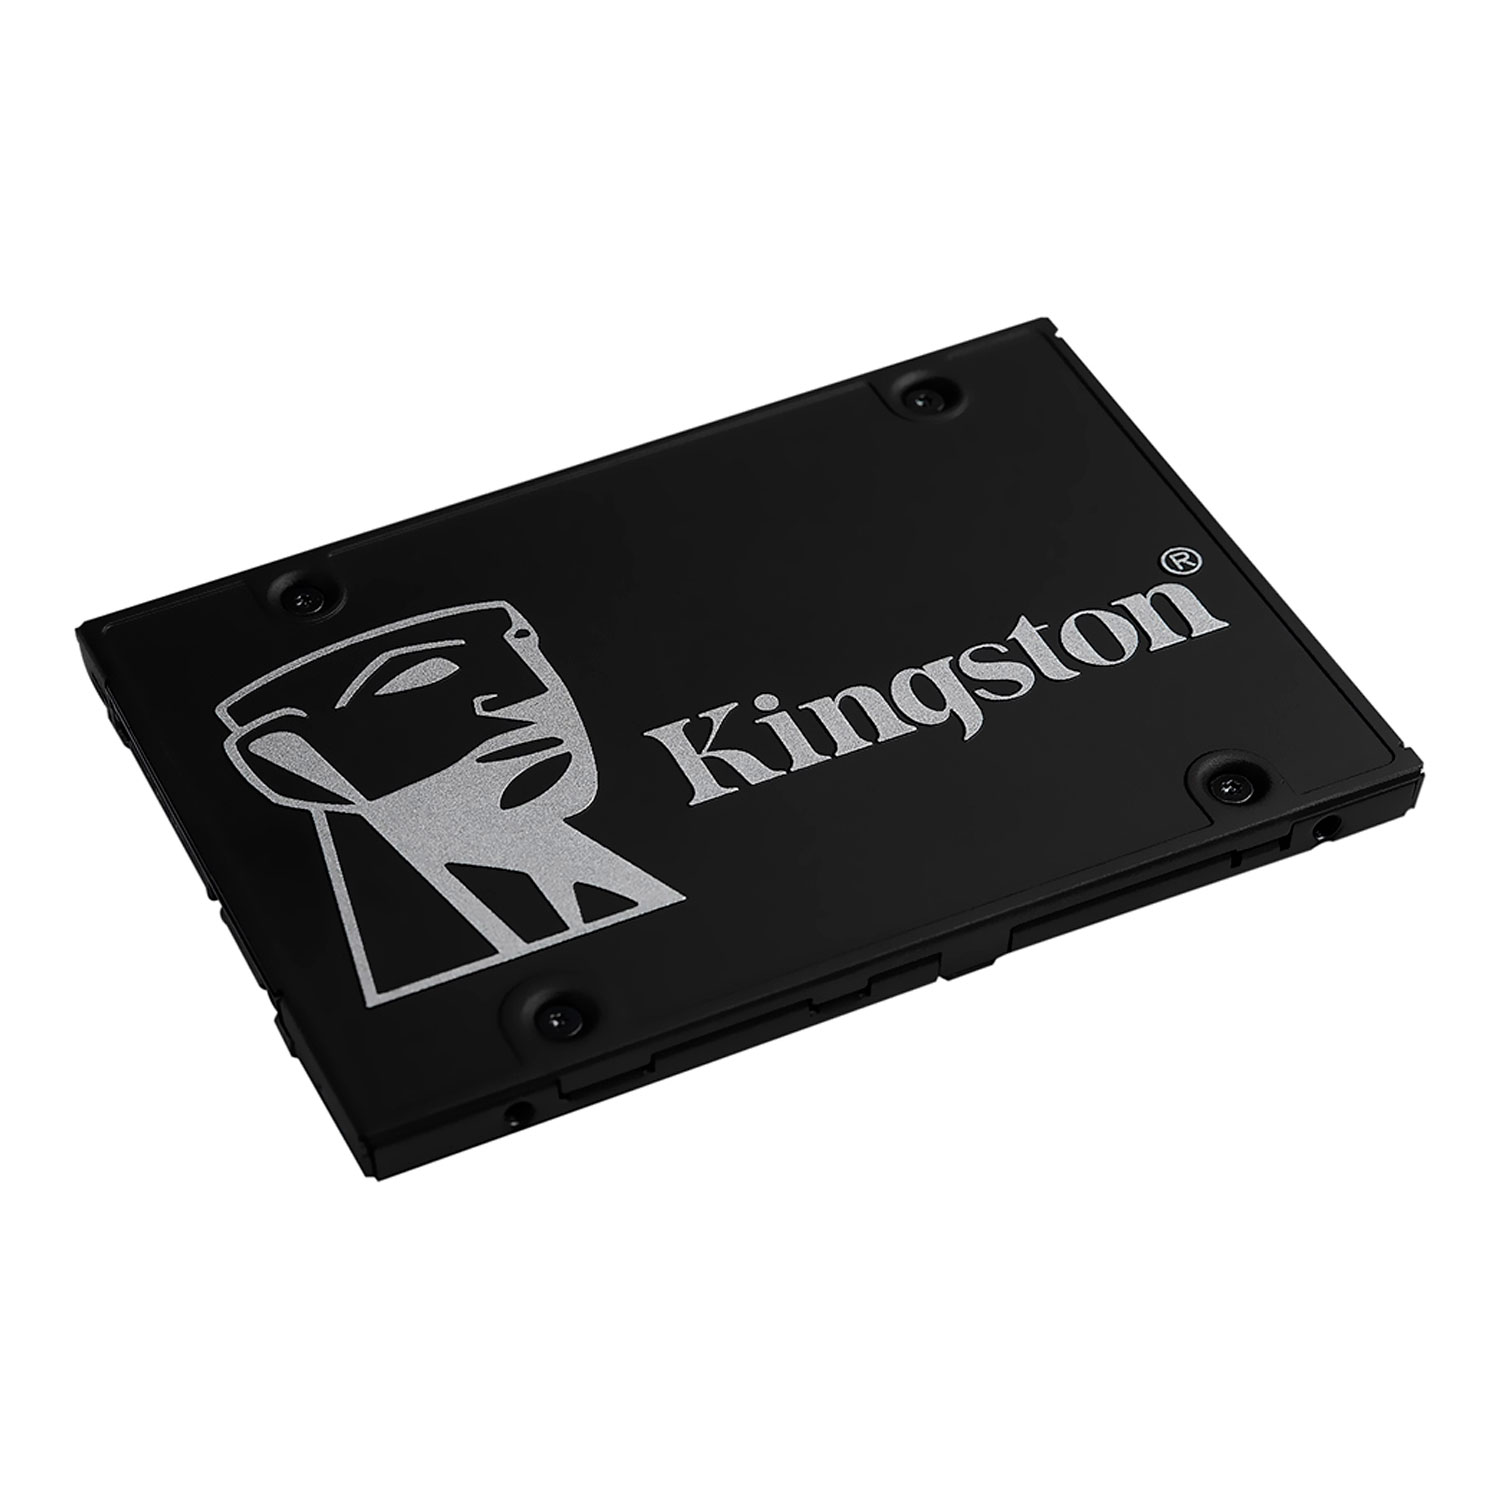 SSD Kingston 256GB 2.5" SATA 3 - SKC600/256G